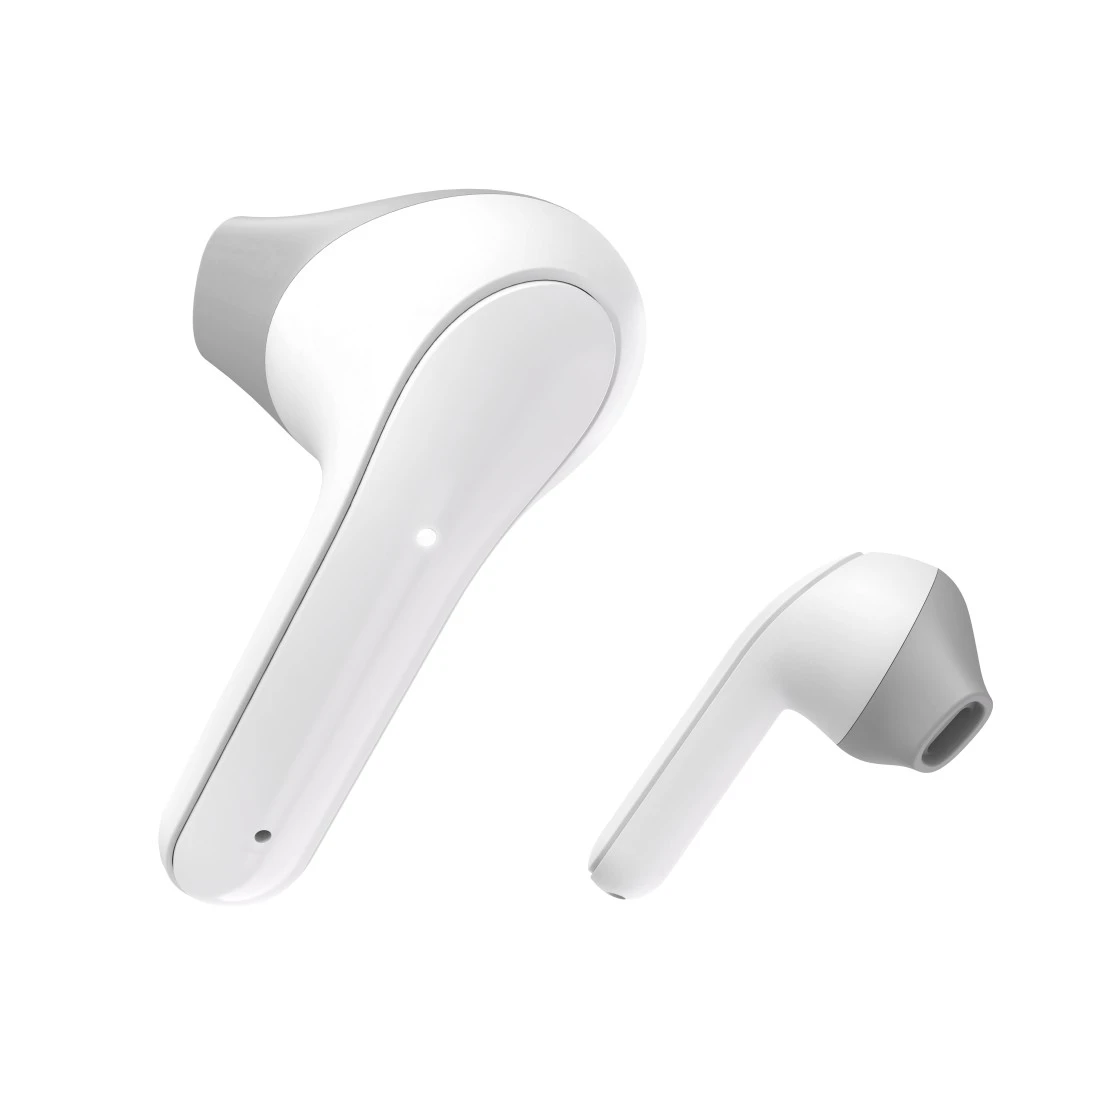 Hama  Auriculares inalámbricos Bluetooth Tipo Diadema